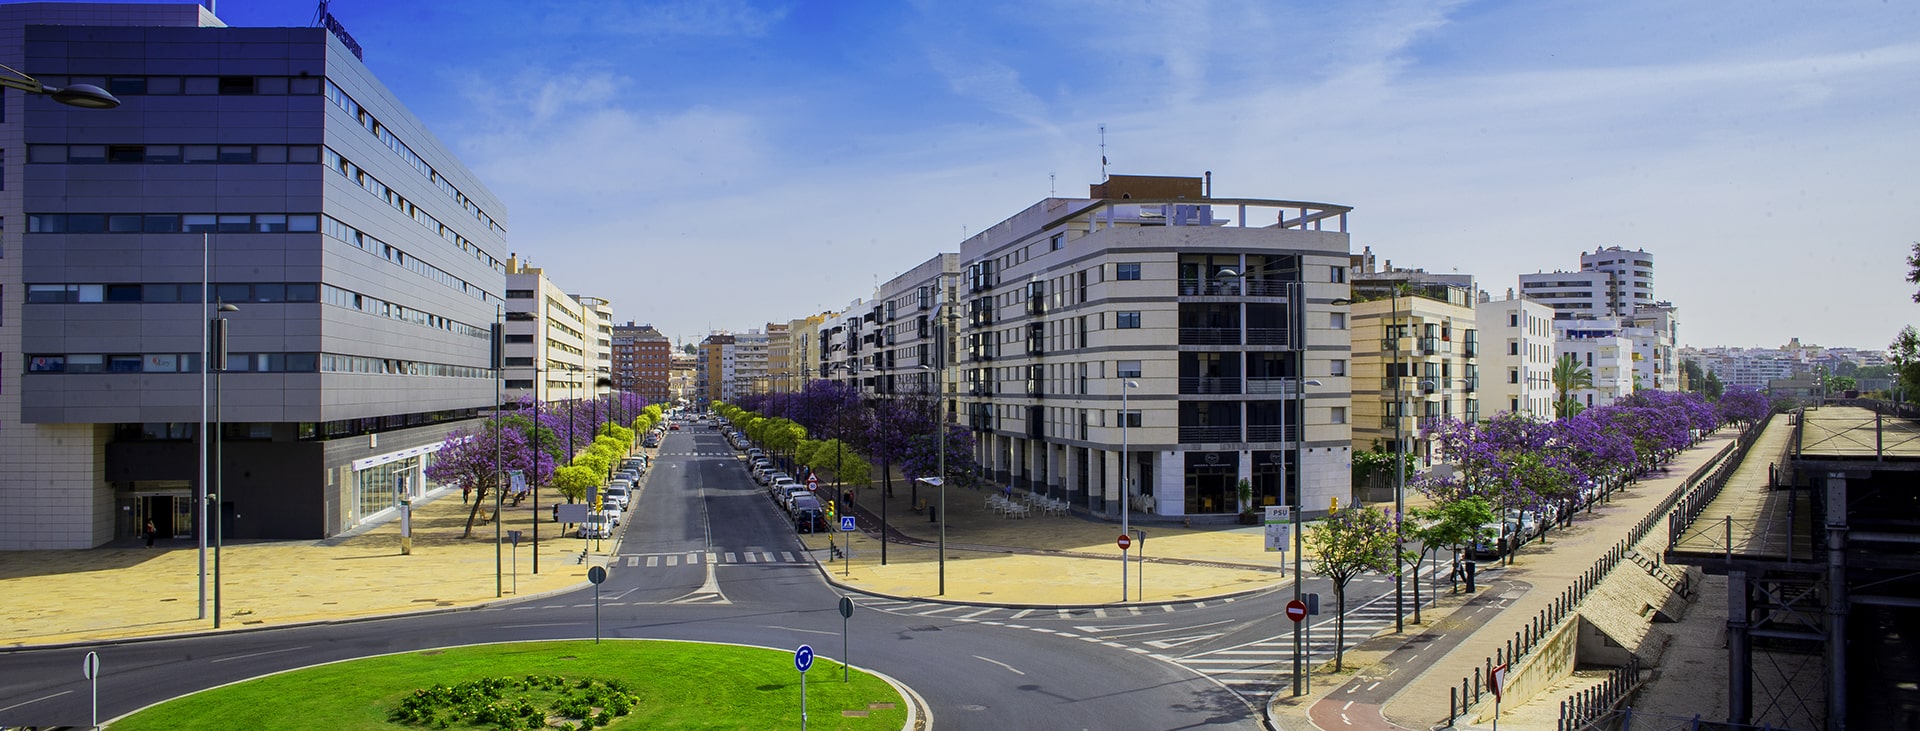 Agenda Urbana de Huelva